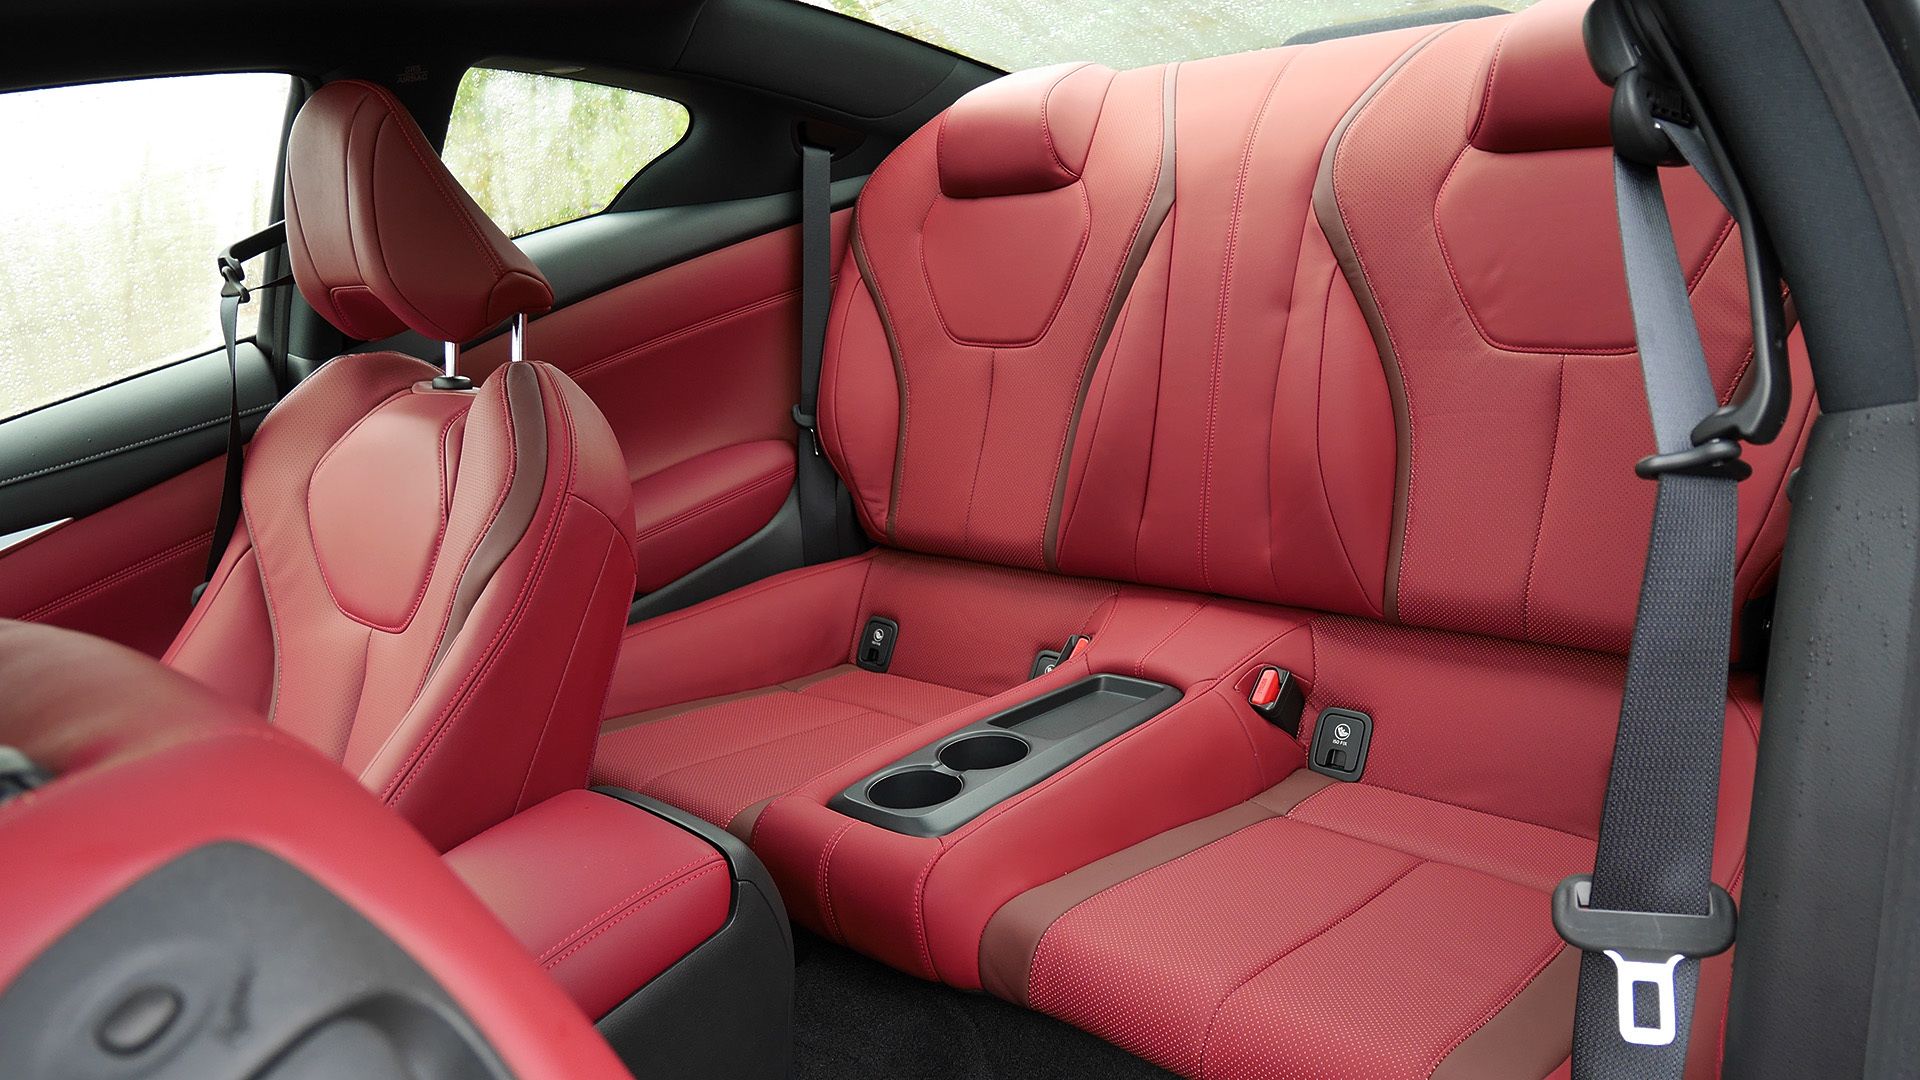 2017 Infiniti Q60 Interior Seats Rear (View 25 of 32)